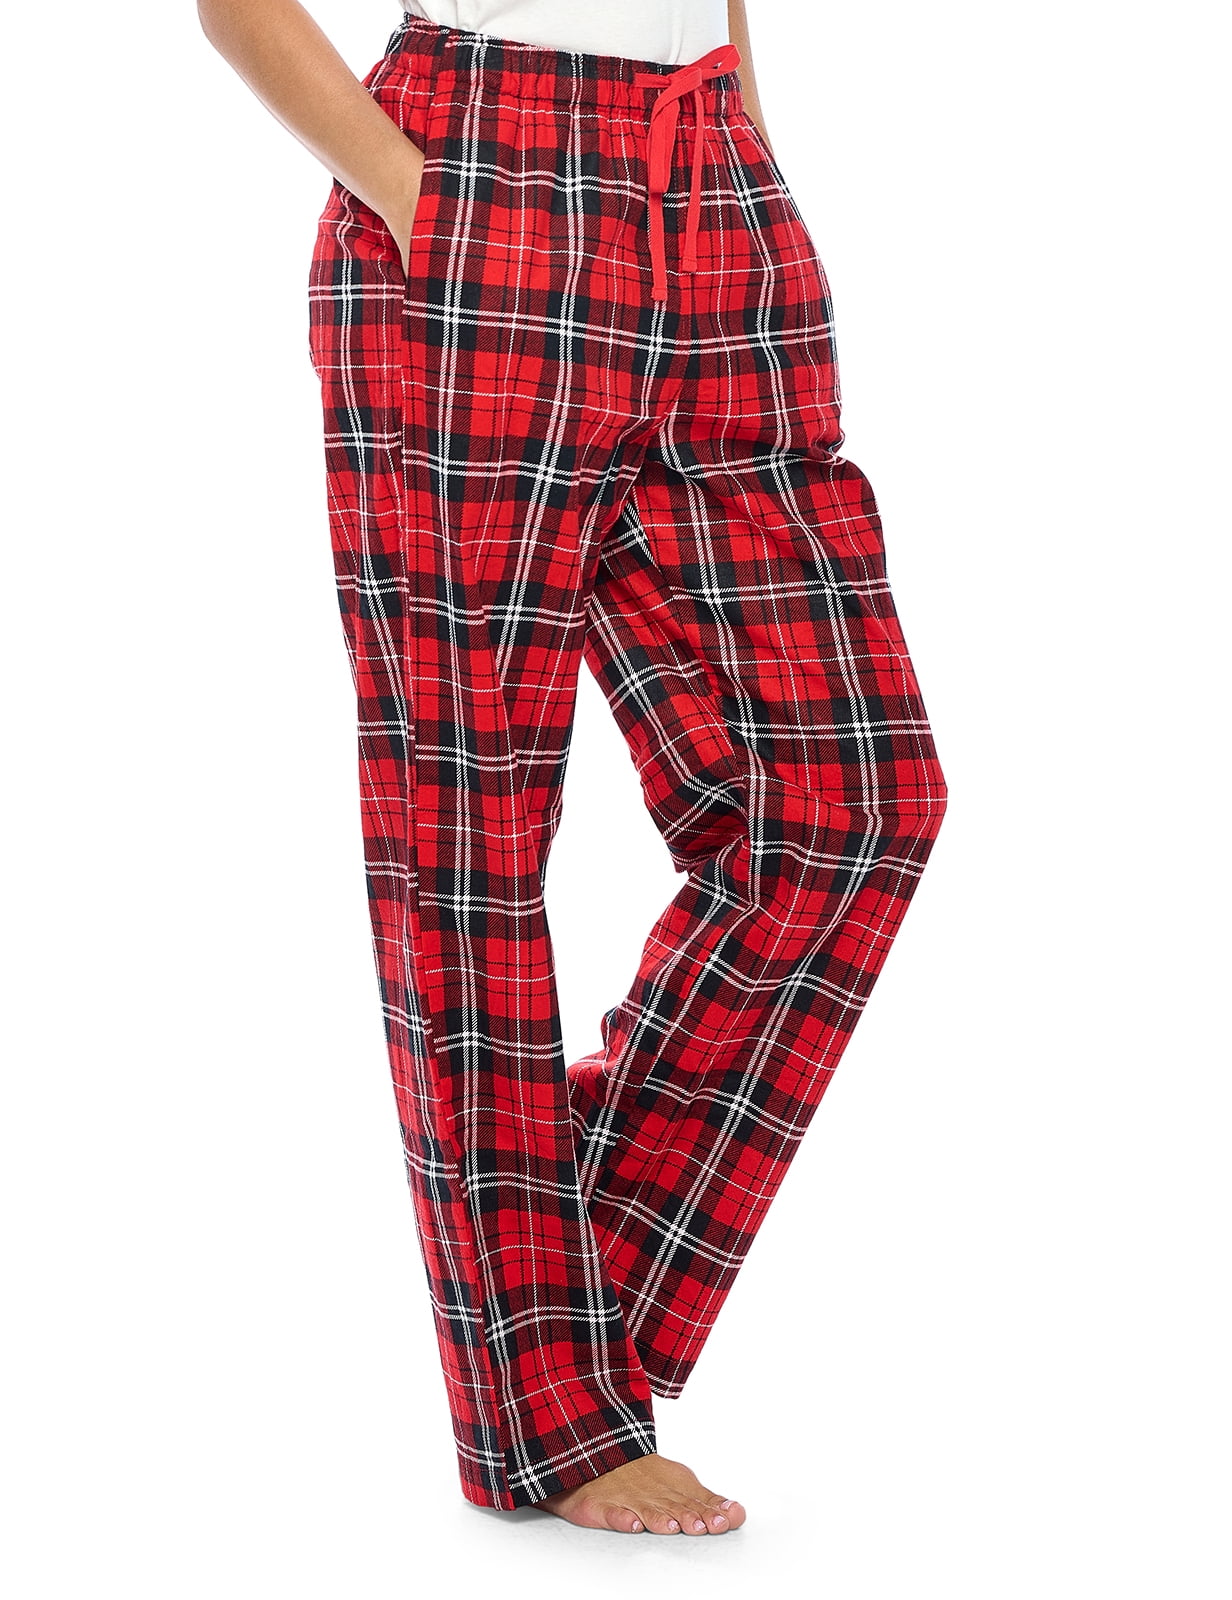 followme Buffalo Plaid Flannel Pajama Joggers for Women with Pockets  (Coral, Medium) 